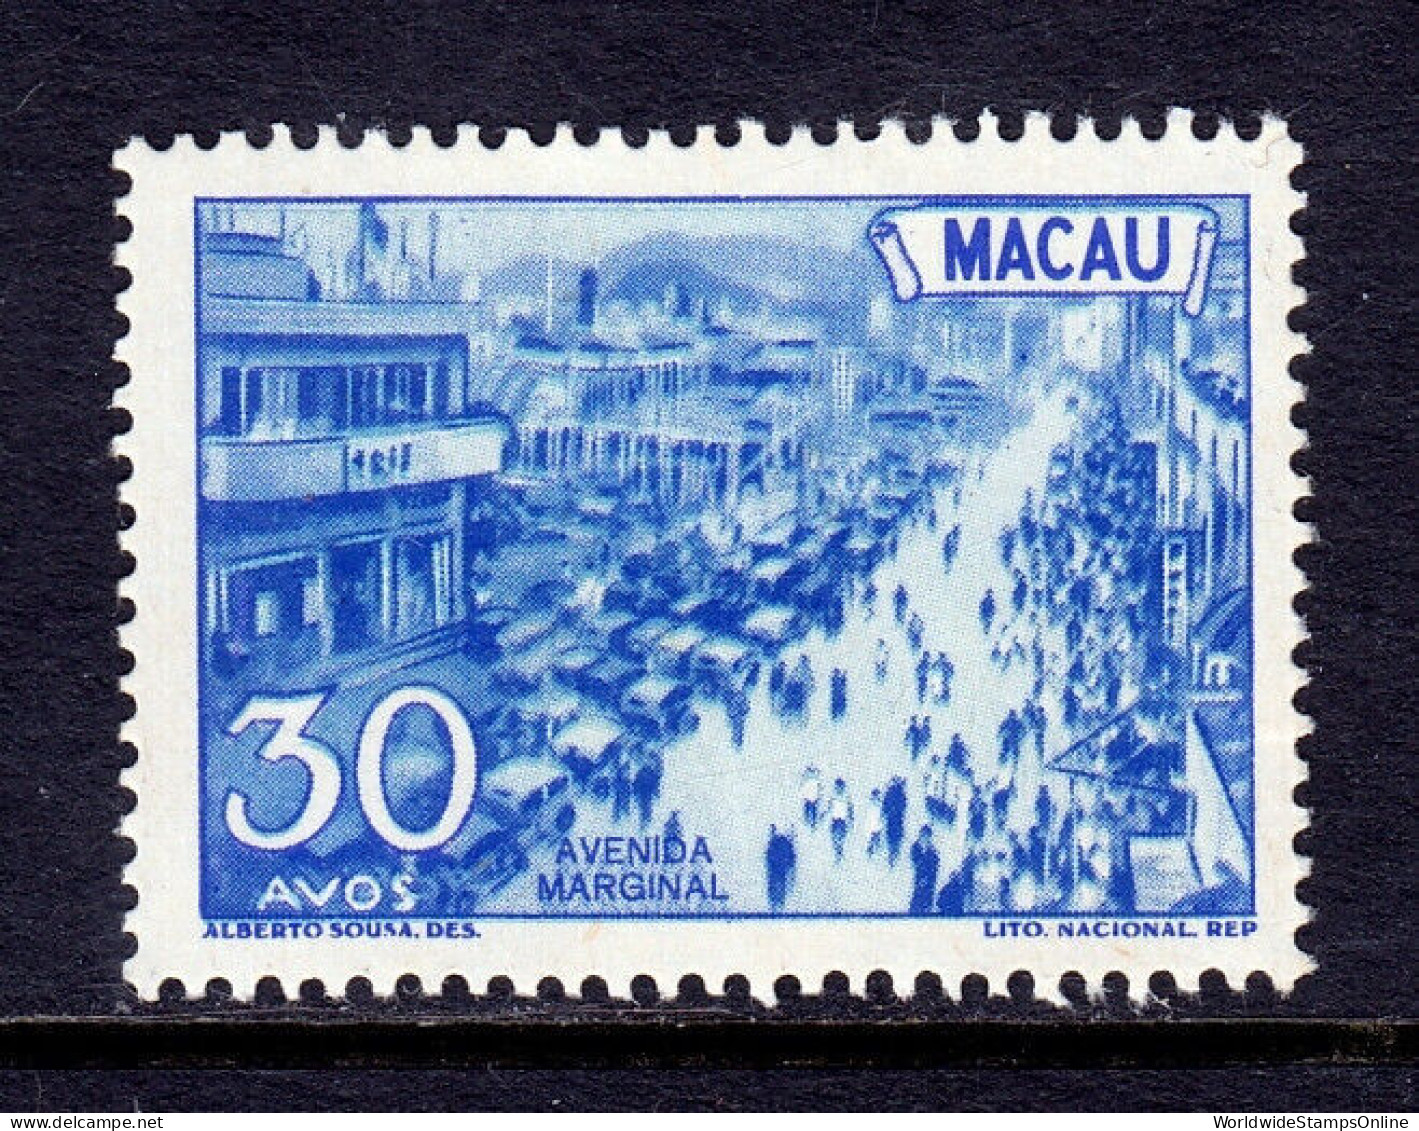 MACAO — SCOTT 346 —  1950 30a MARGINAL AVE PICTORIAL — MH — SCV $28 - Nuovi